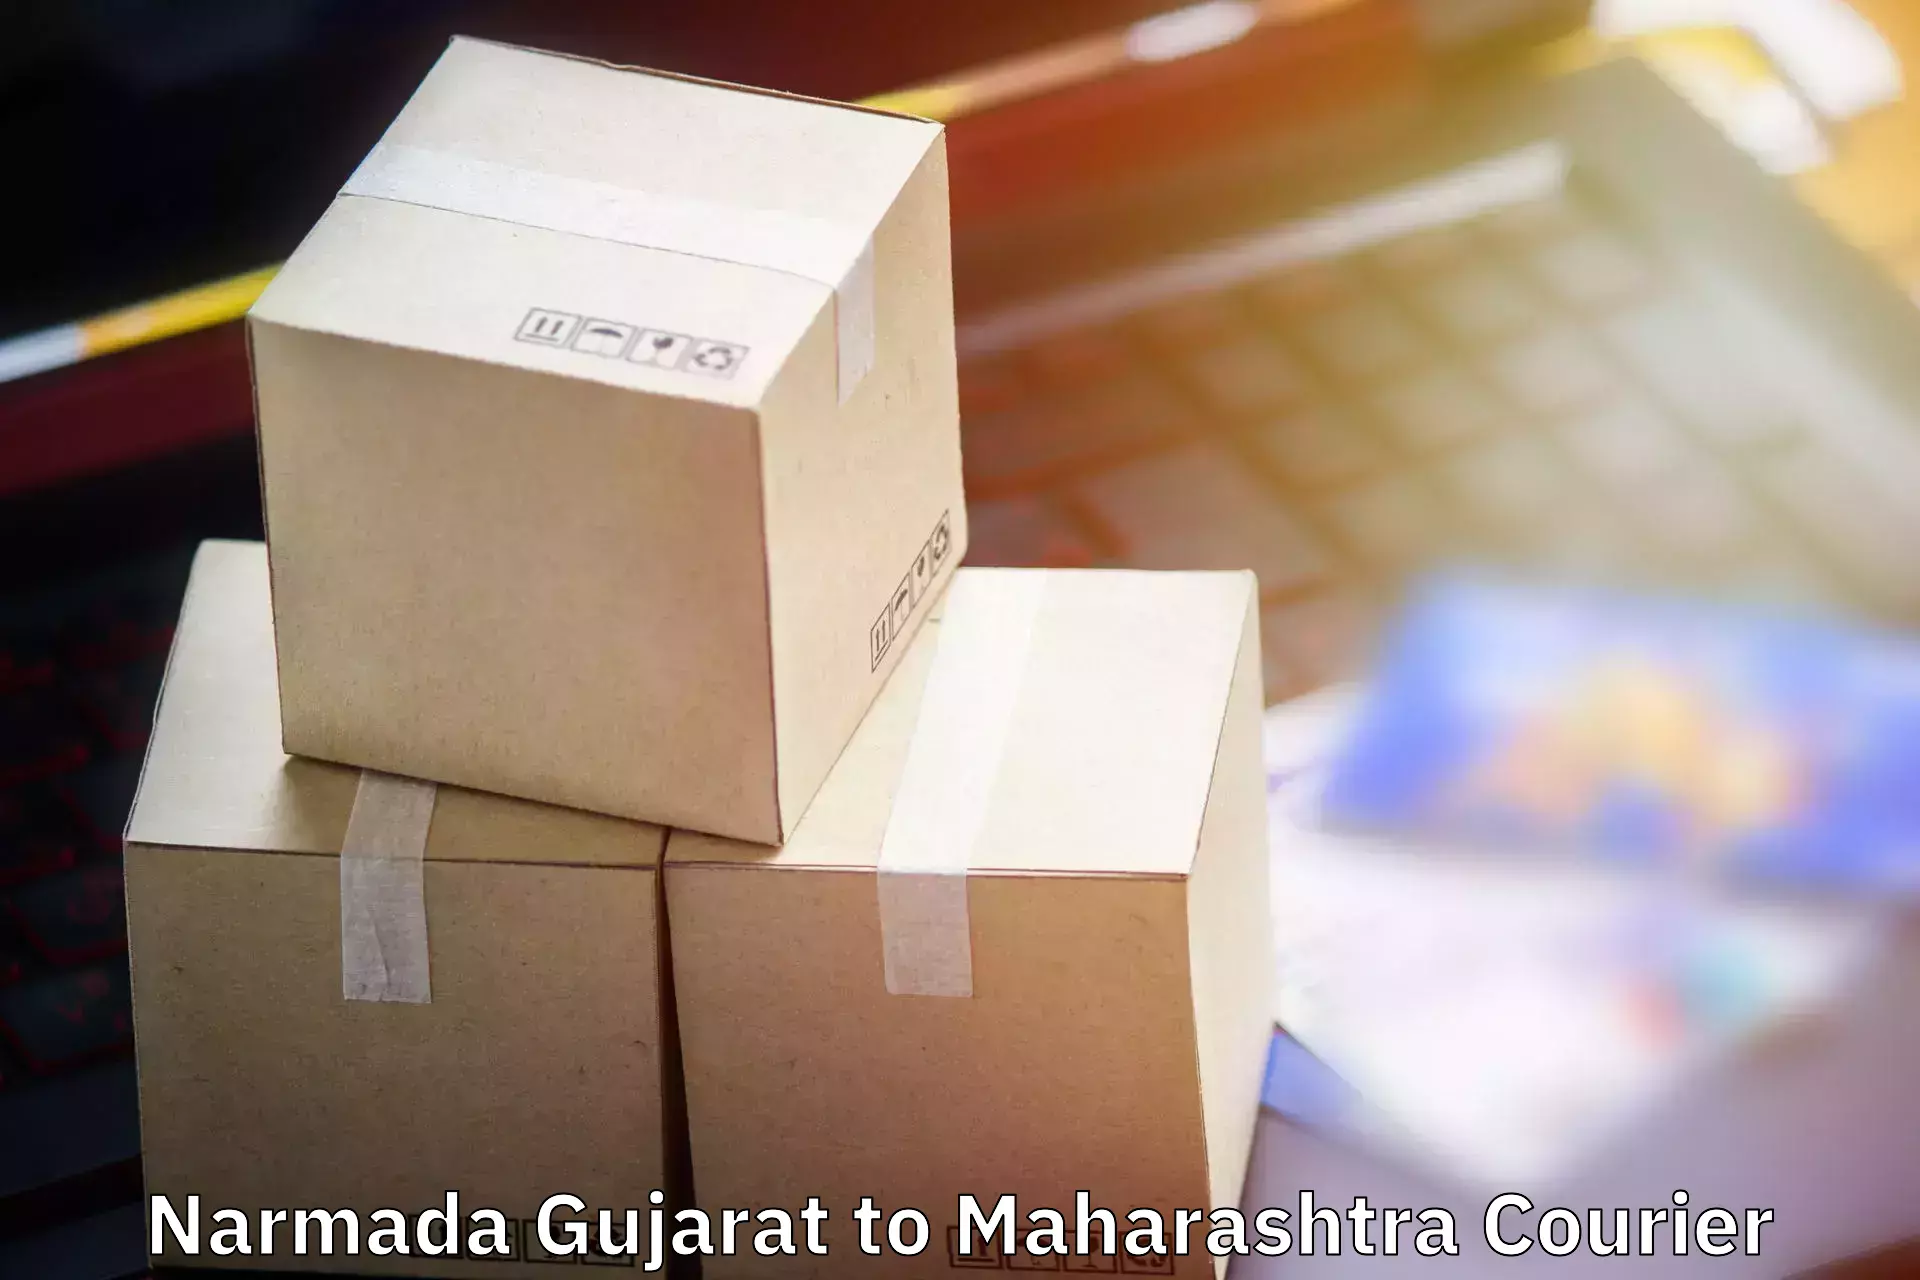 Baggage transport scheduler Narmada Gujarat to Maharashtra